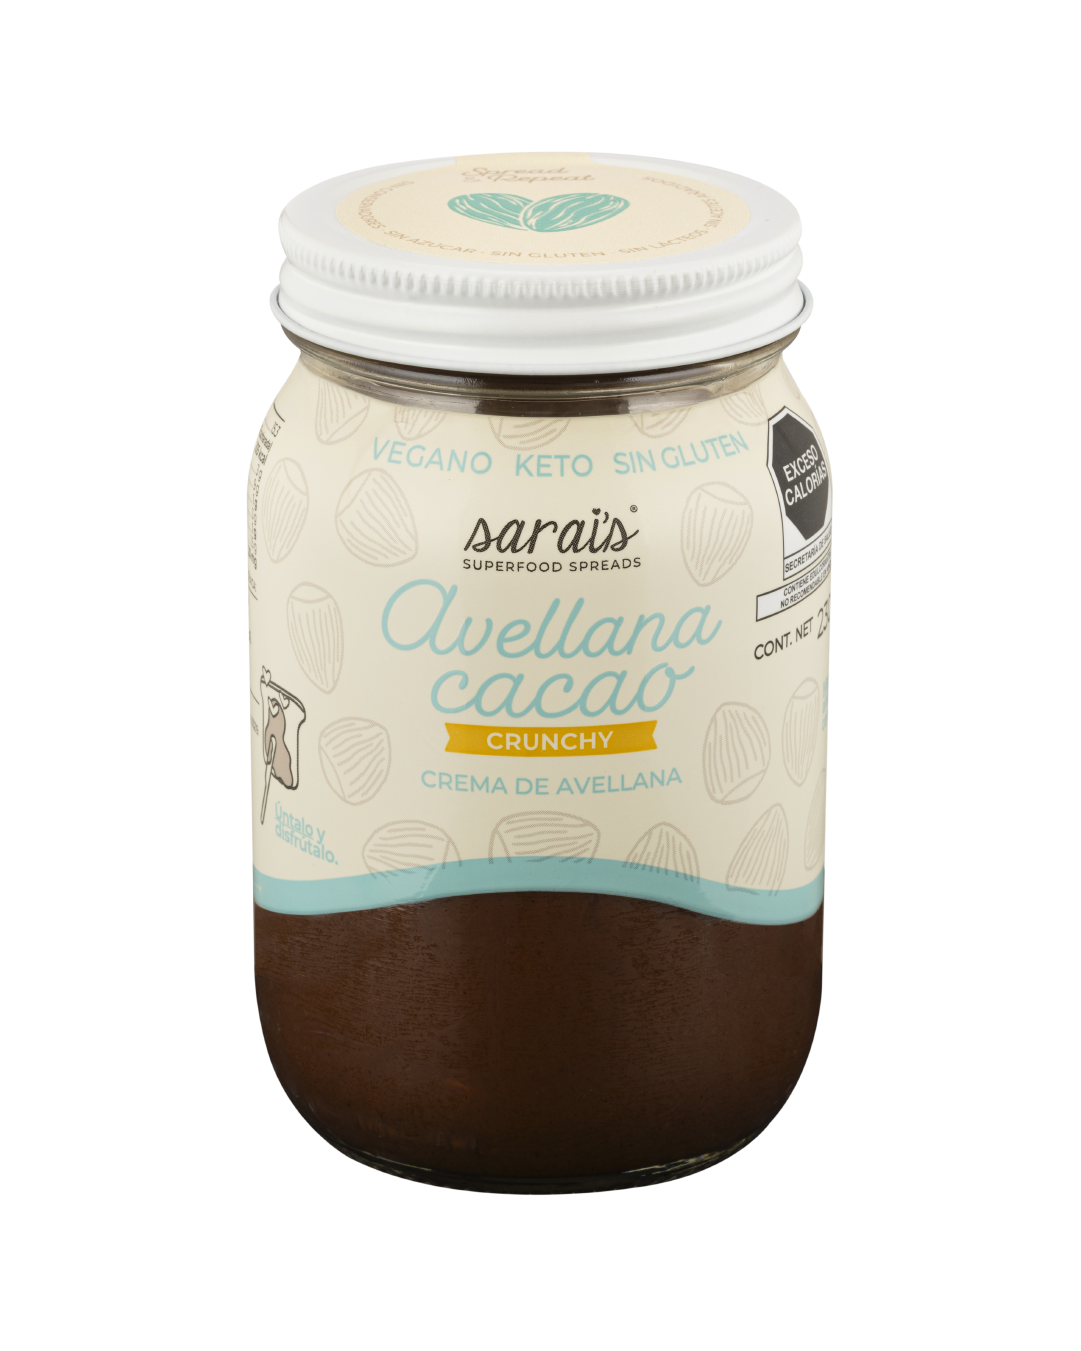 Crema de Avellana Cacao Crunchy